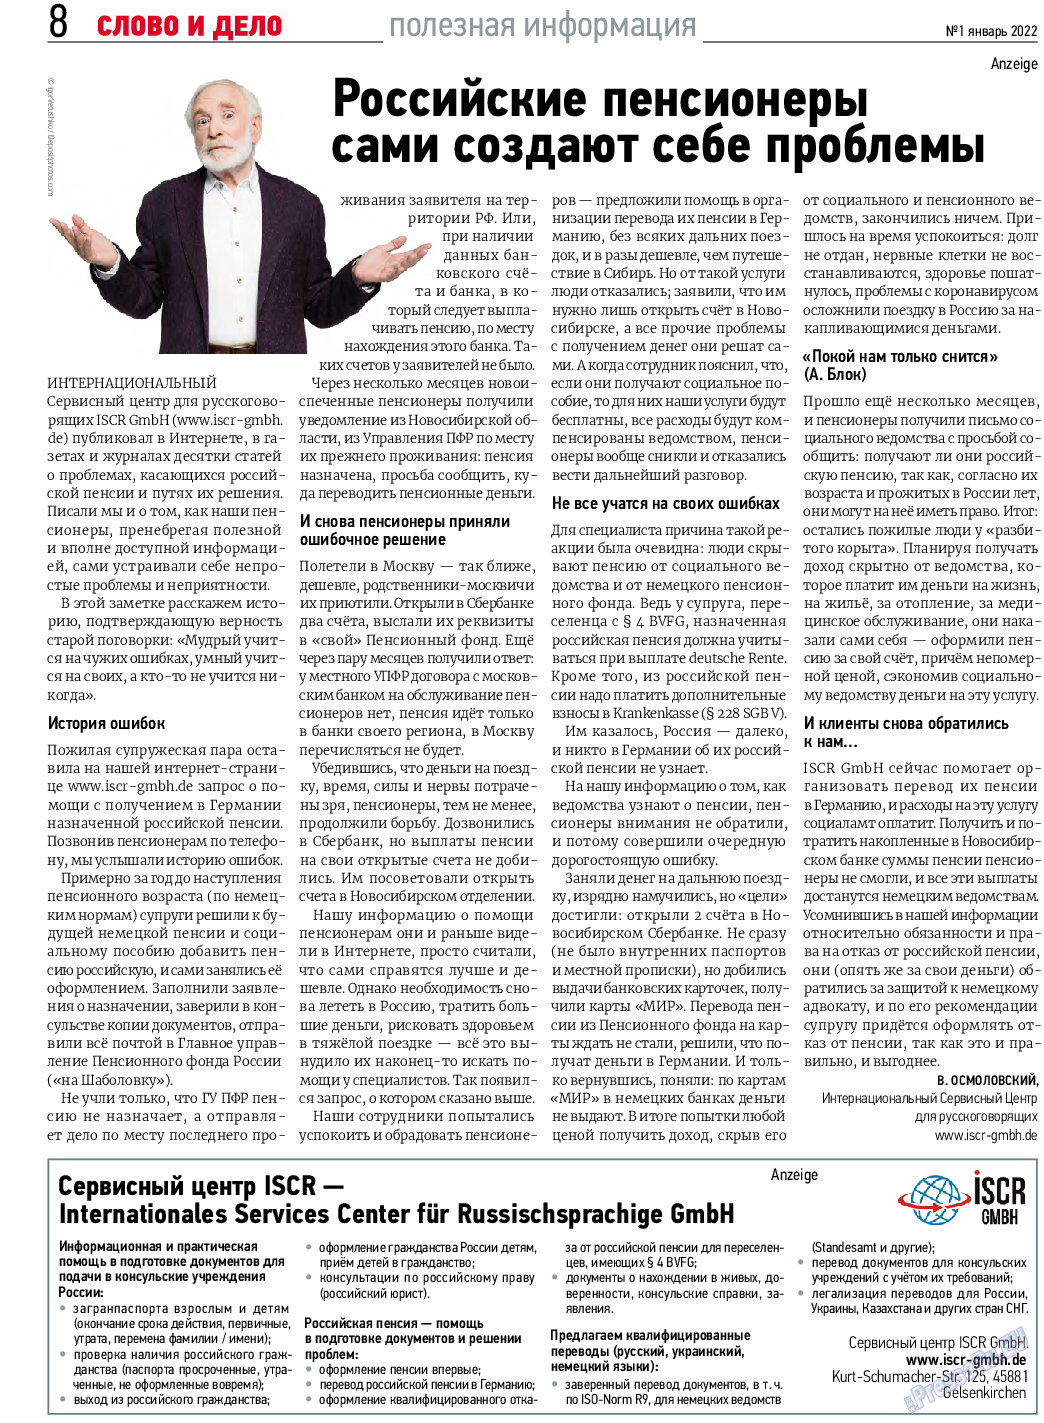 Телеграф NRW, газета. 2022 №1 стр.8